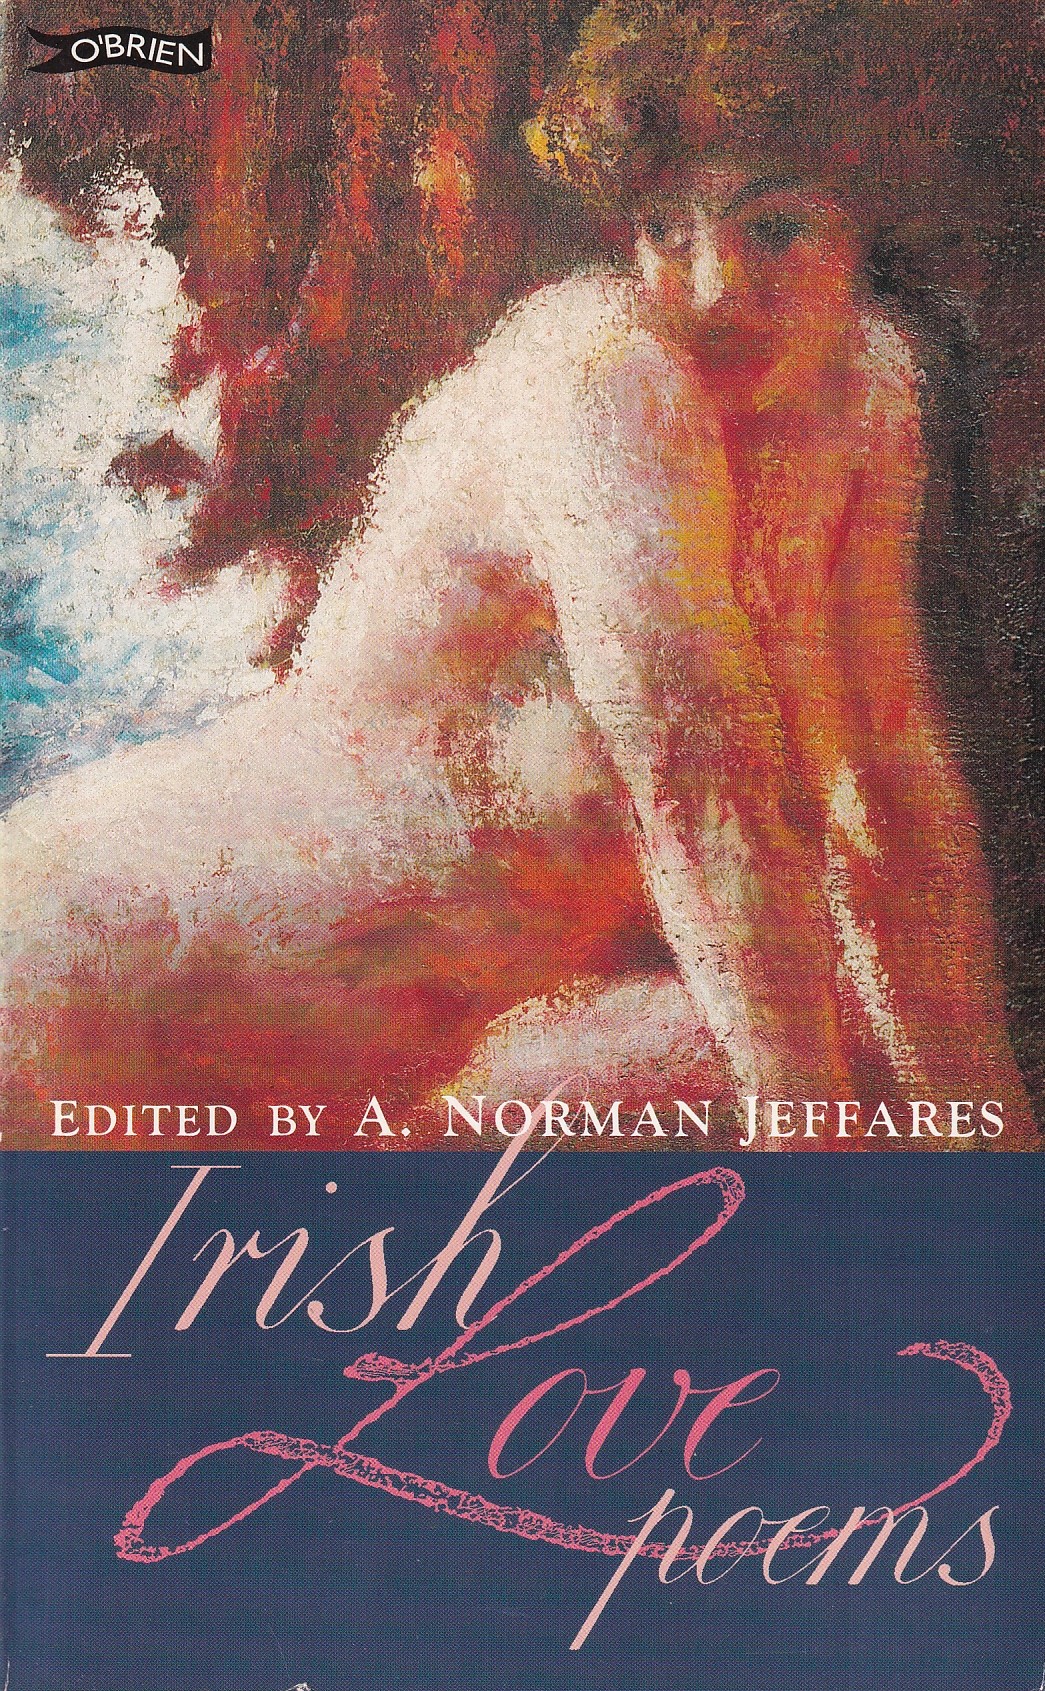 Irish Love Poems by A. Norman Jeffares (ed.)